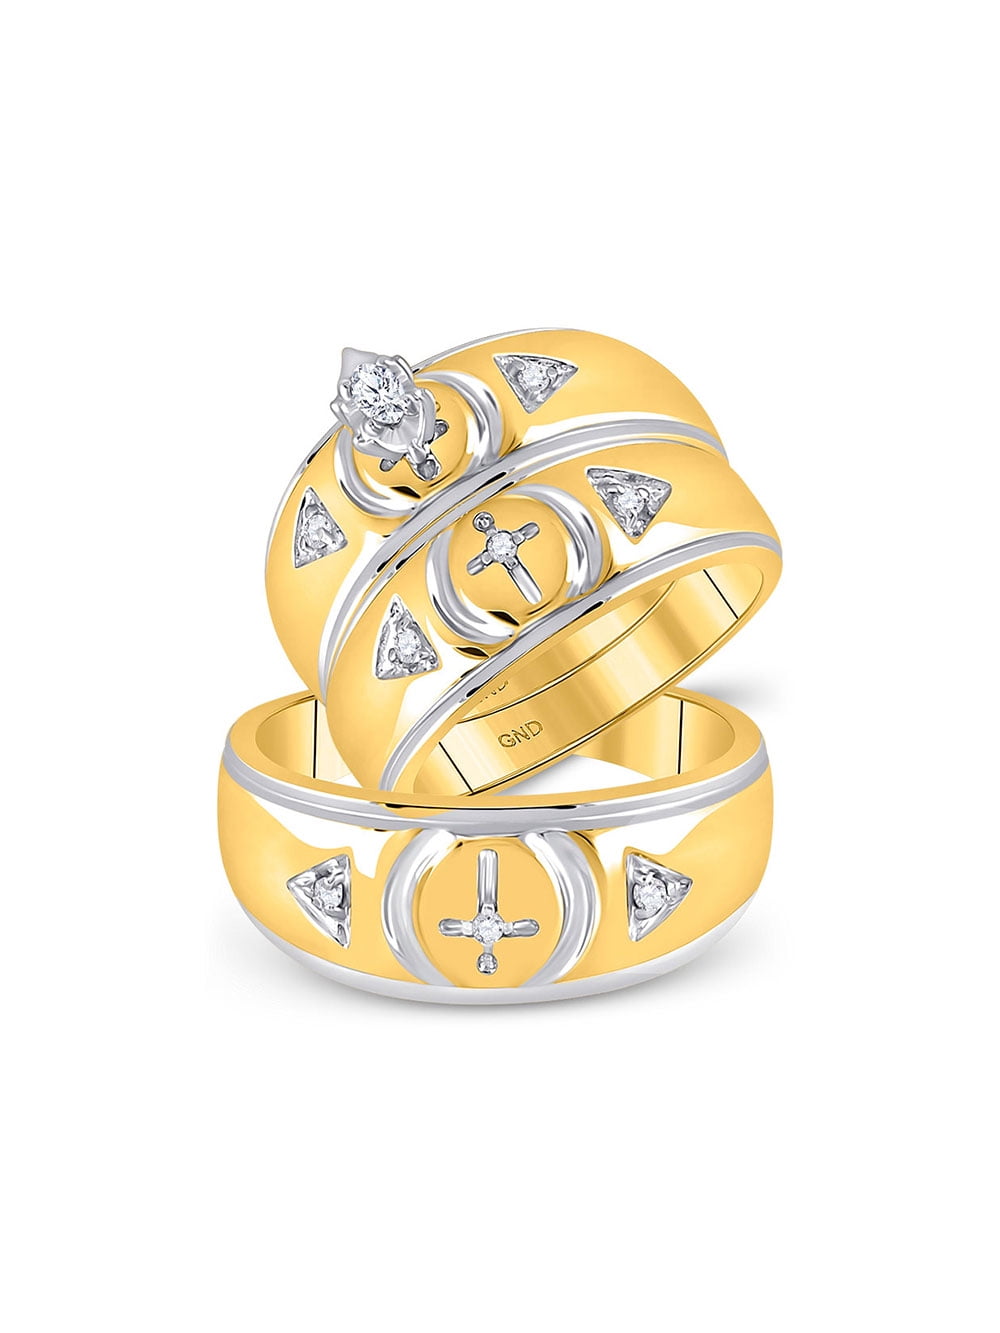 10k White Gold & Yellow Gold Diamond Mens Cross Wedding Band Ring 1/6 ct